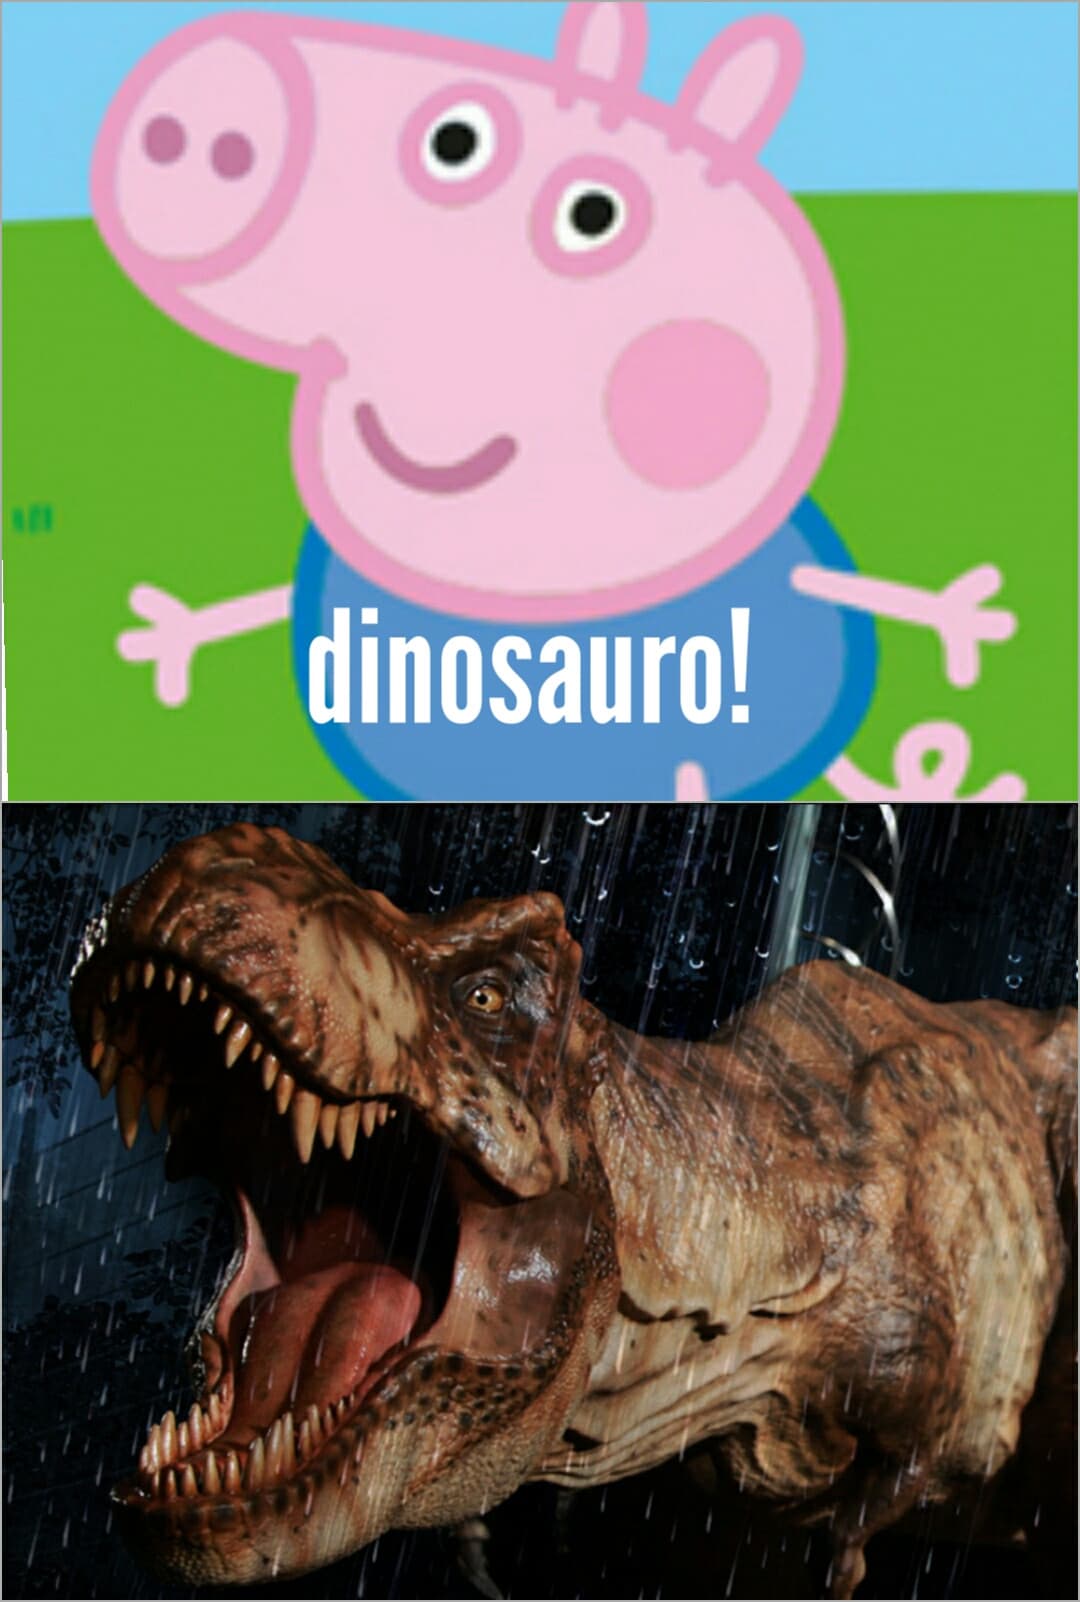 Dinosauro!